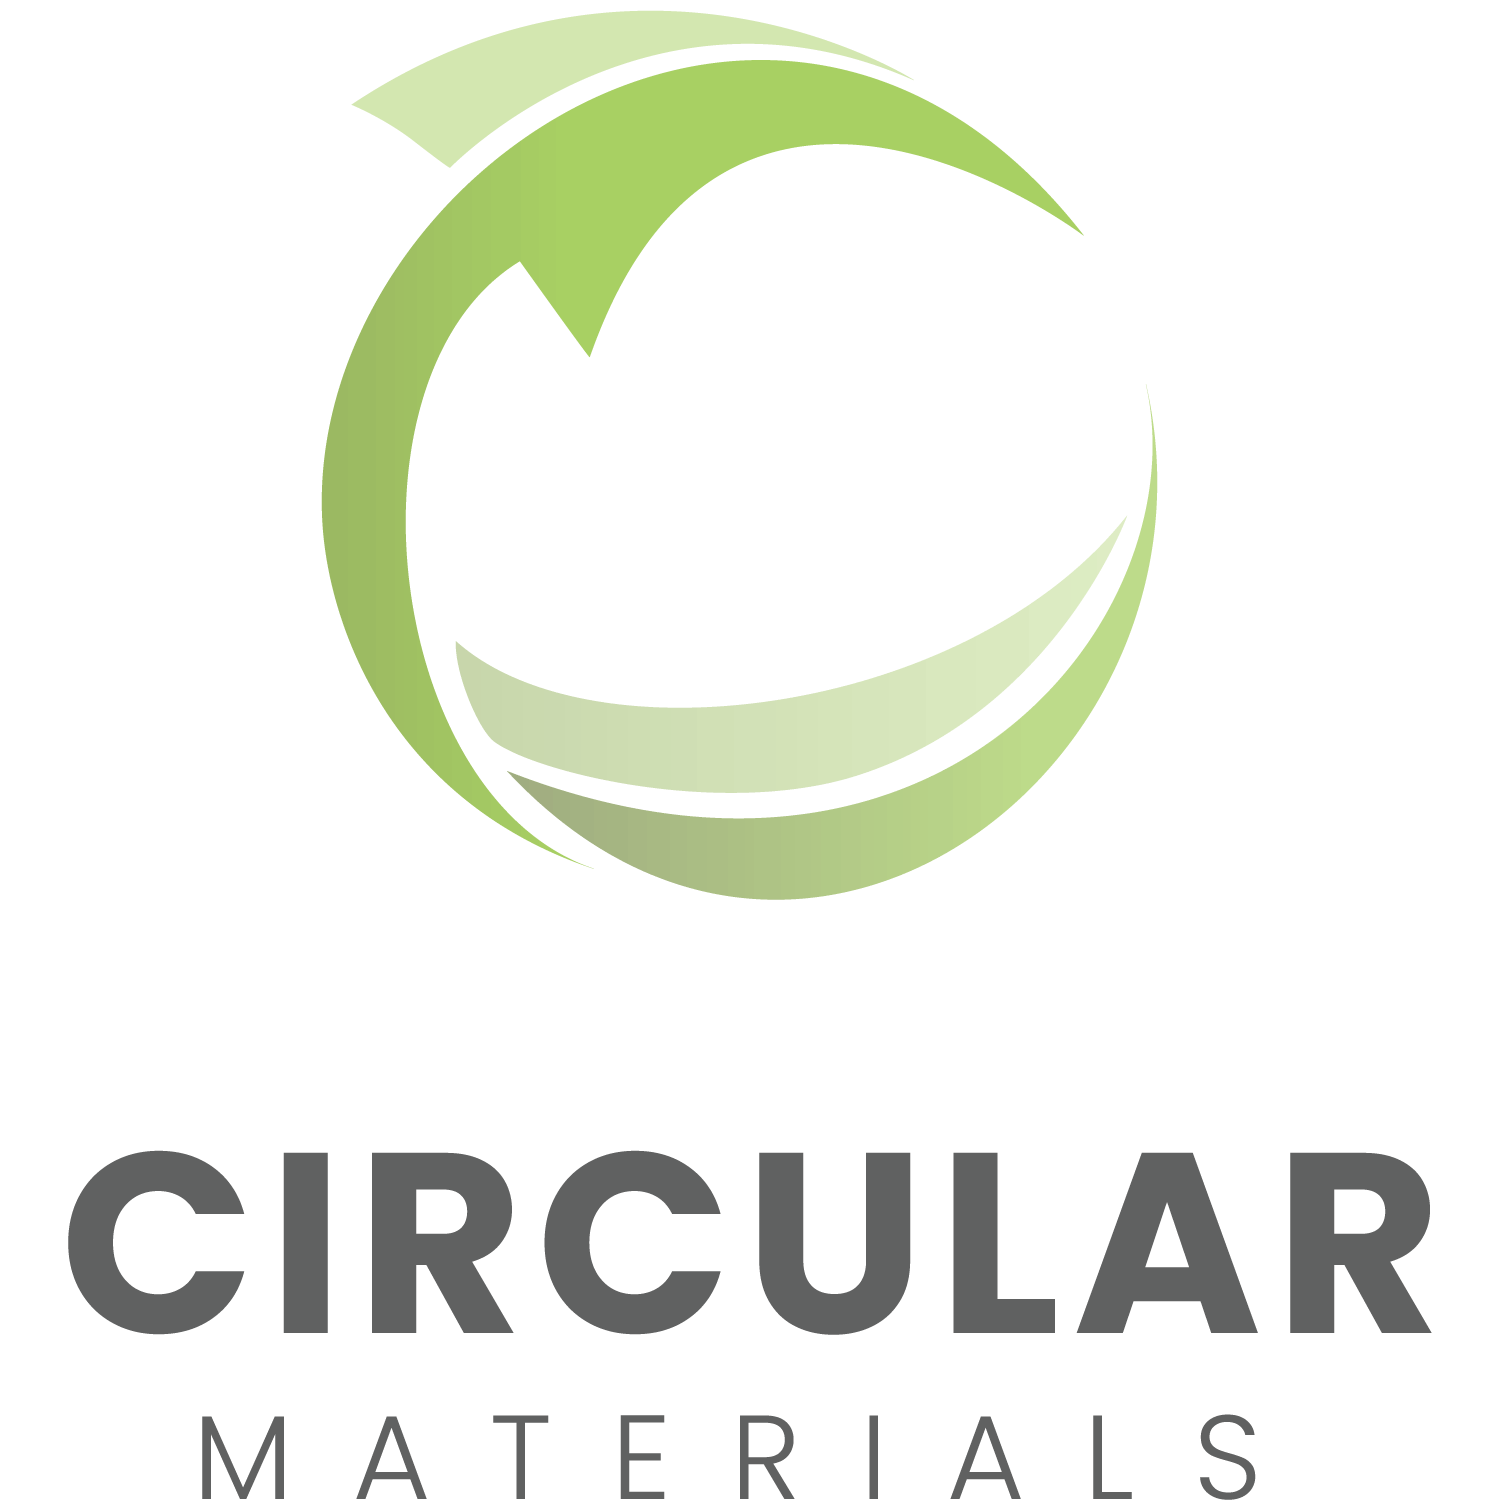 Circular Materials logo